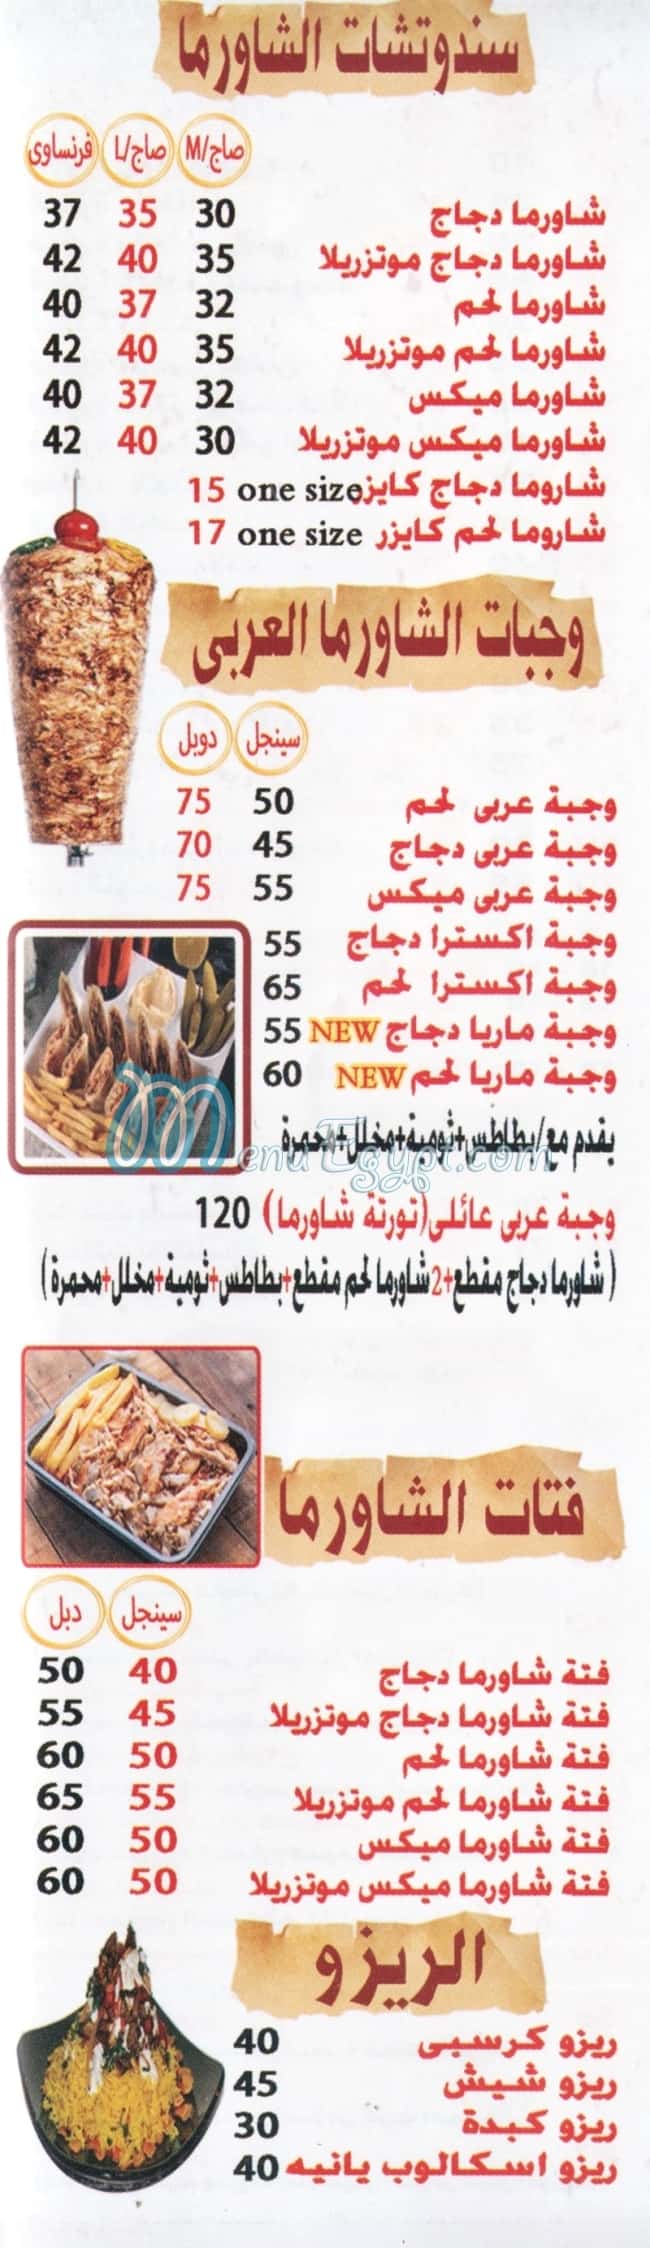 Awlad Ali menu Egypt 2